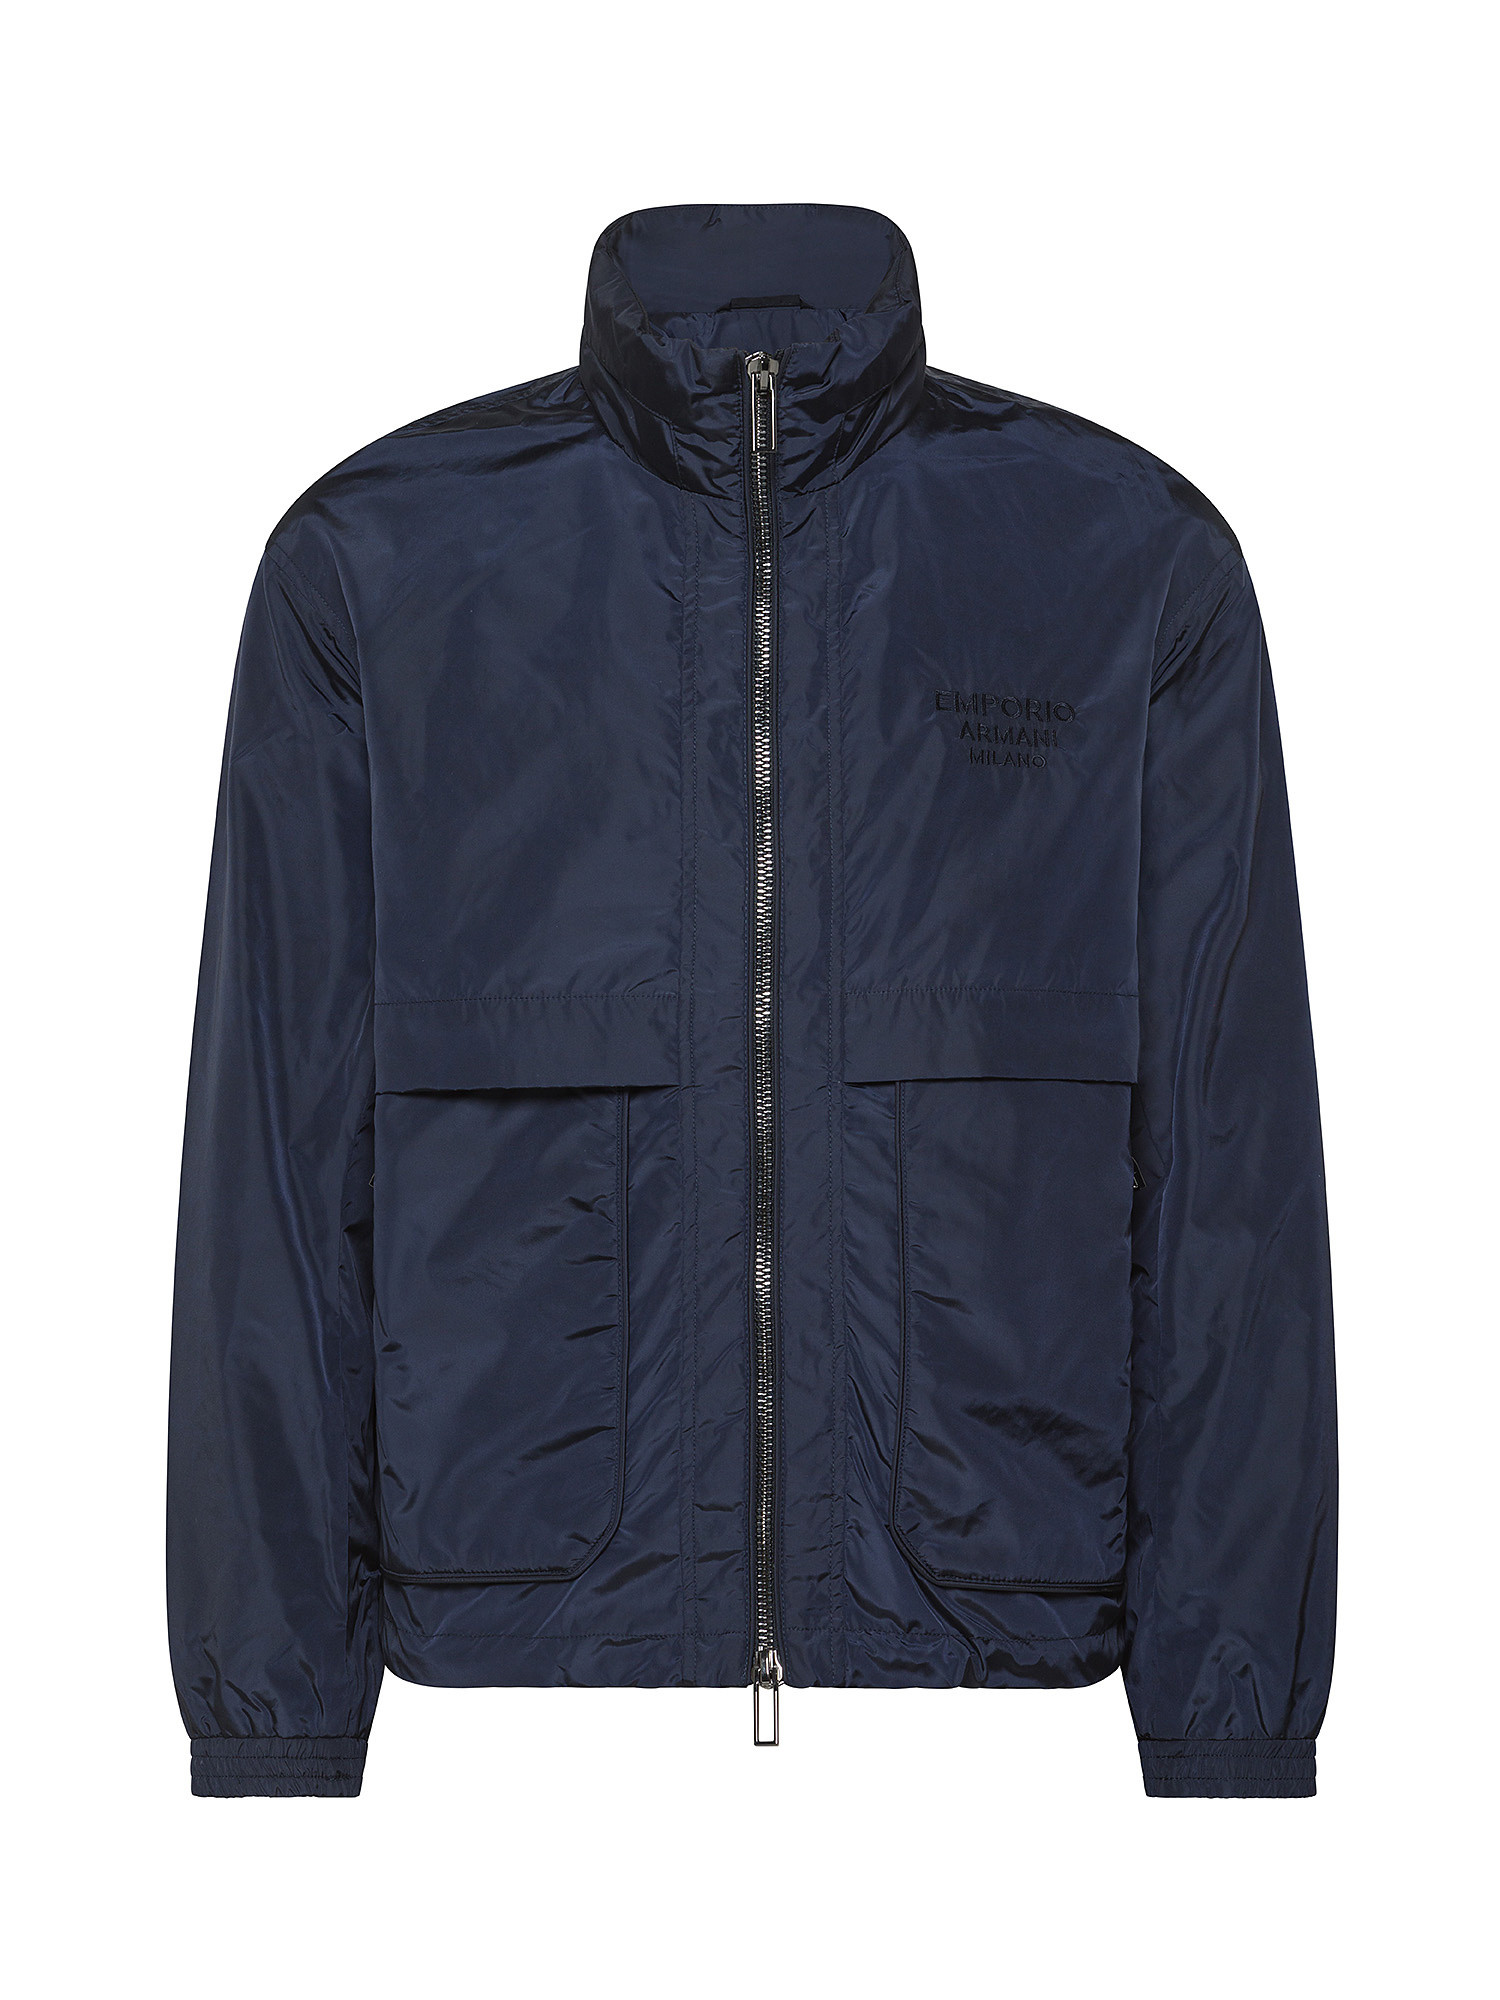 Emporio Armani - Jacket with logo, Dark Blue, large image number 0